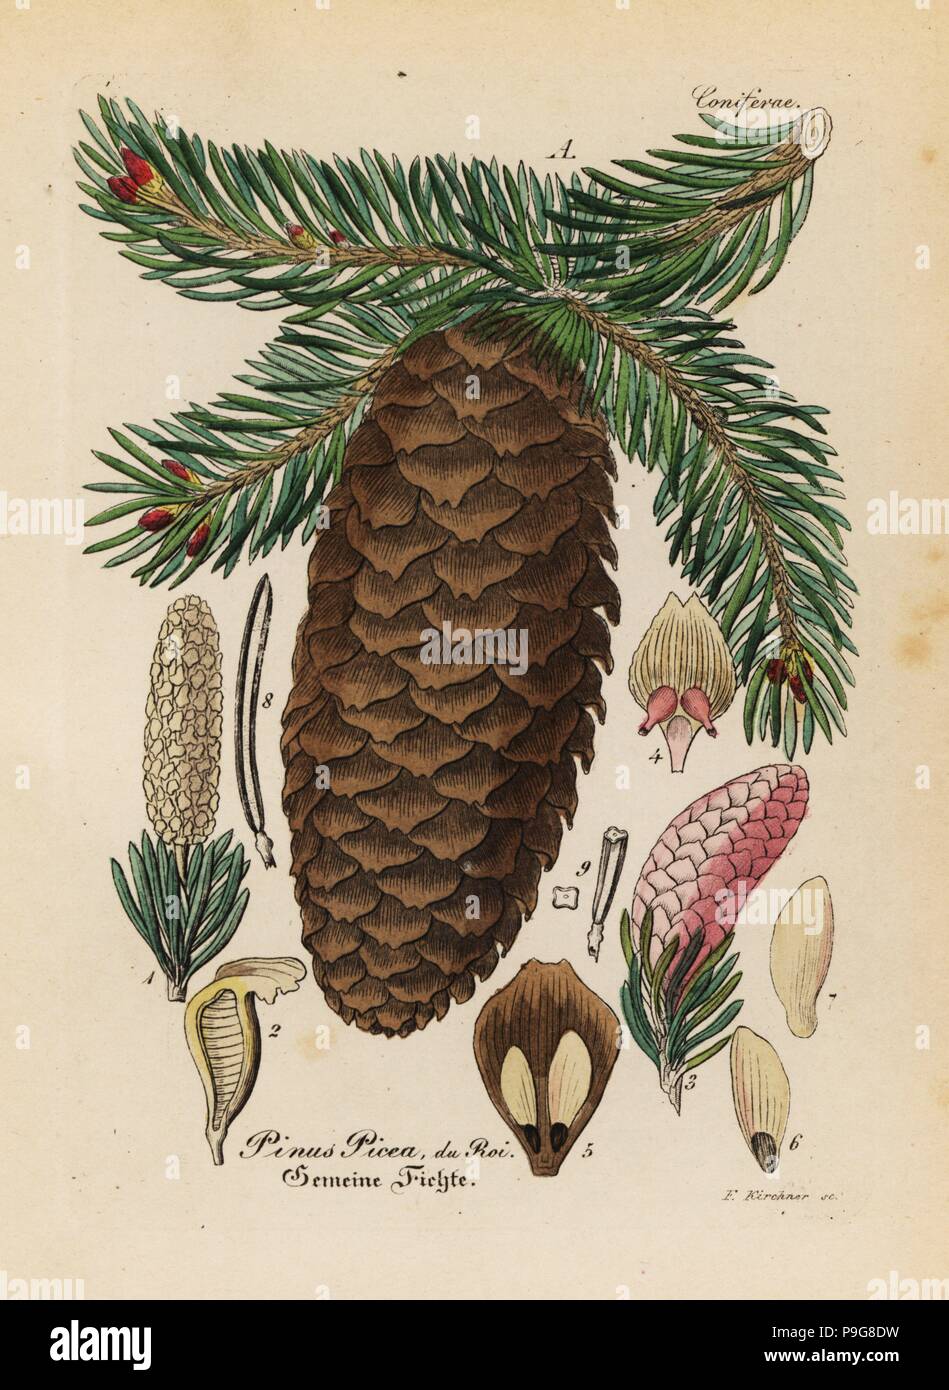 Silver fir, Abies alba (Pinus picea). Handcoloured copperplate engraving from Dr. Willibald Artus' Hand-Atlas sammtlicher mediinisch-pharmaceutischer Gewachse, (Handbook of all medical-pharmaceutical plants), Jena, 1876. Stock Photo